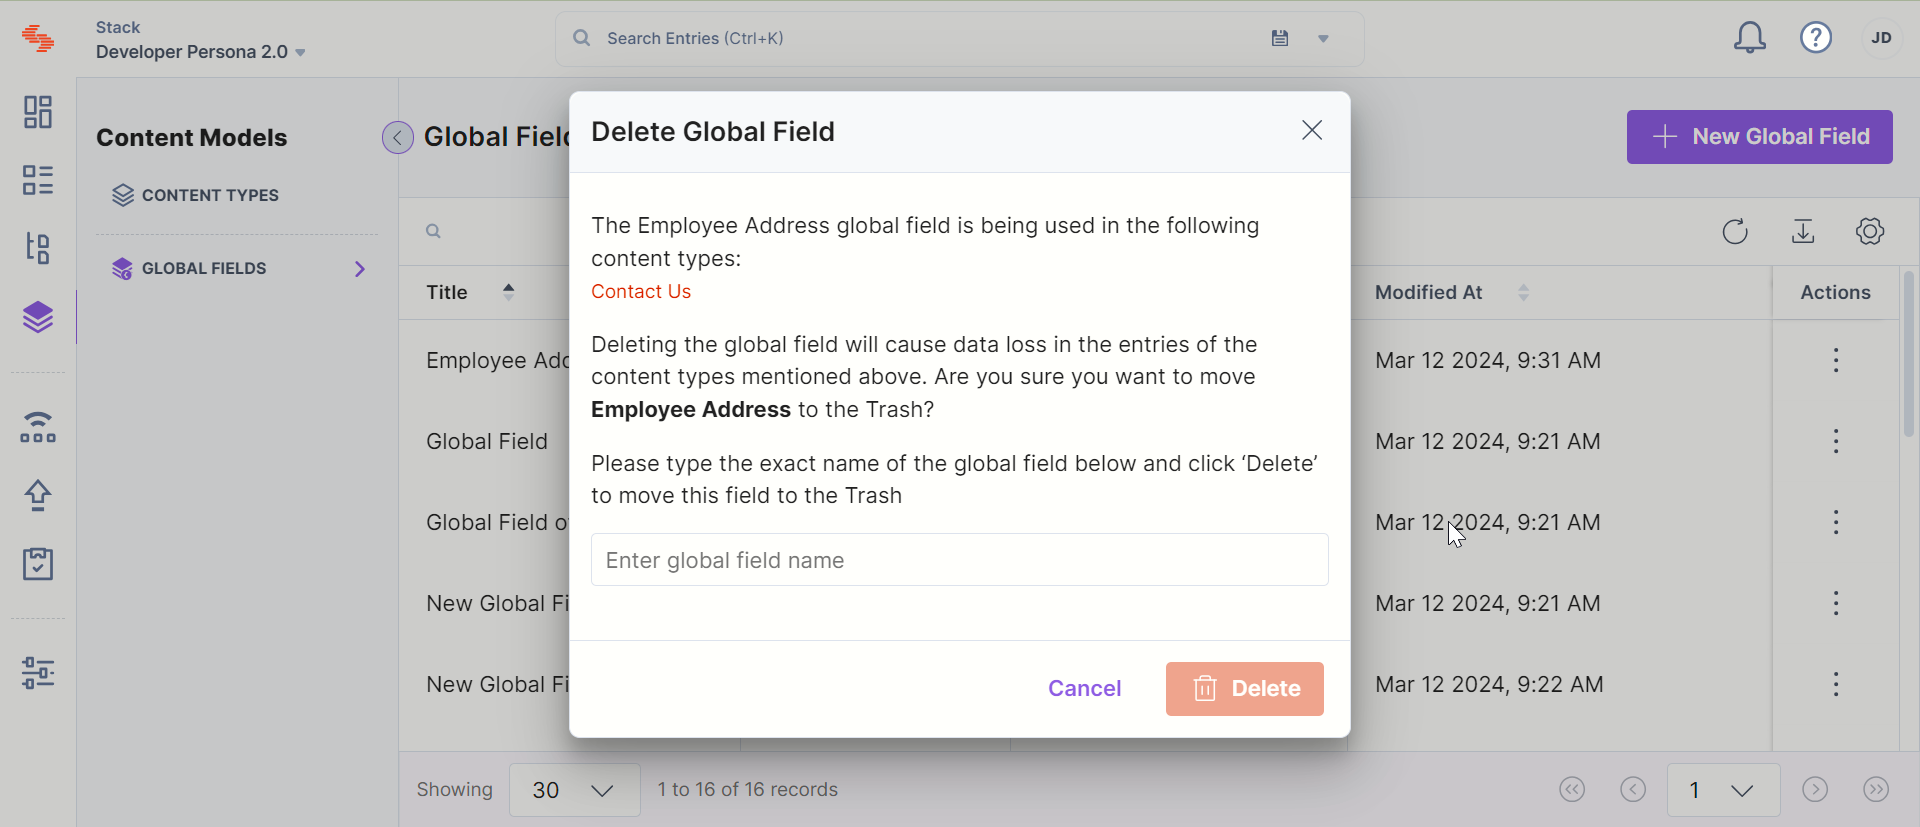 delete-global-field-ss2.png